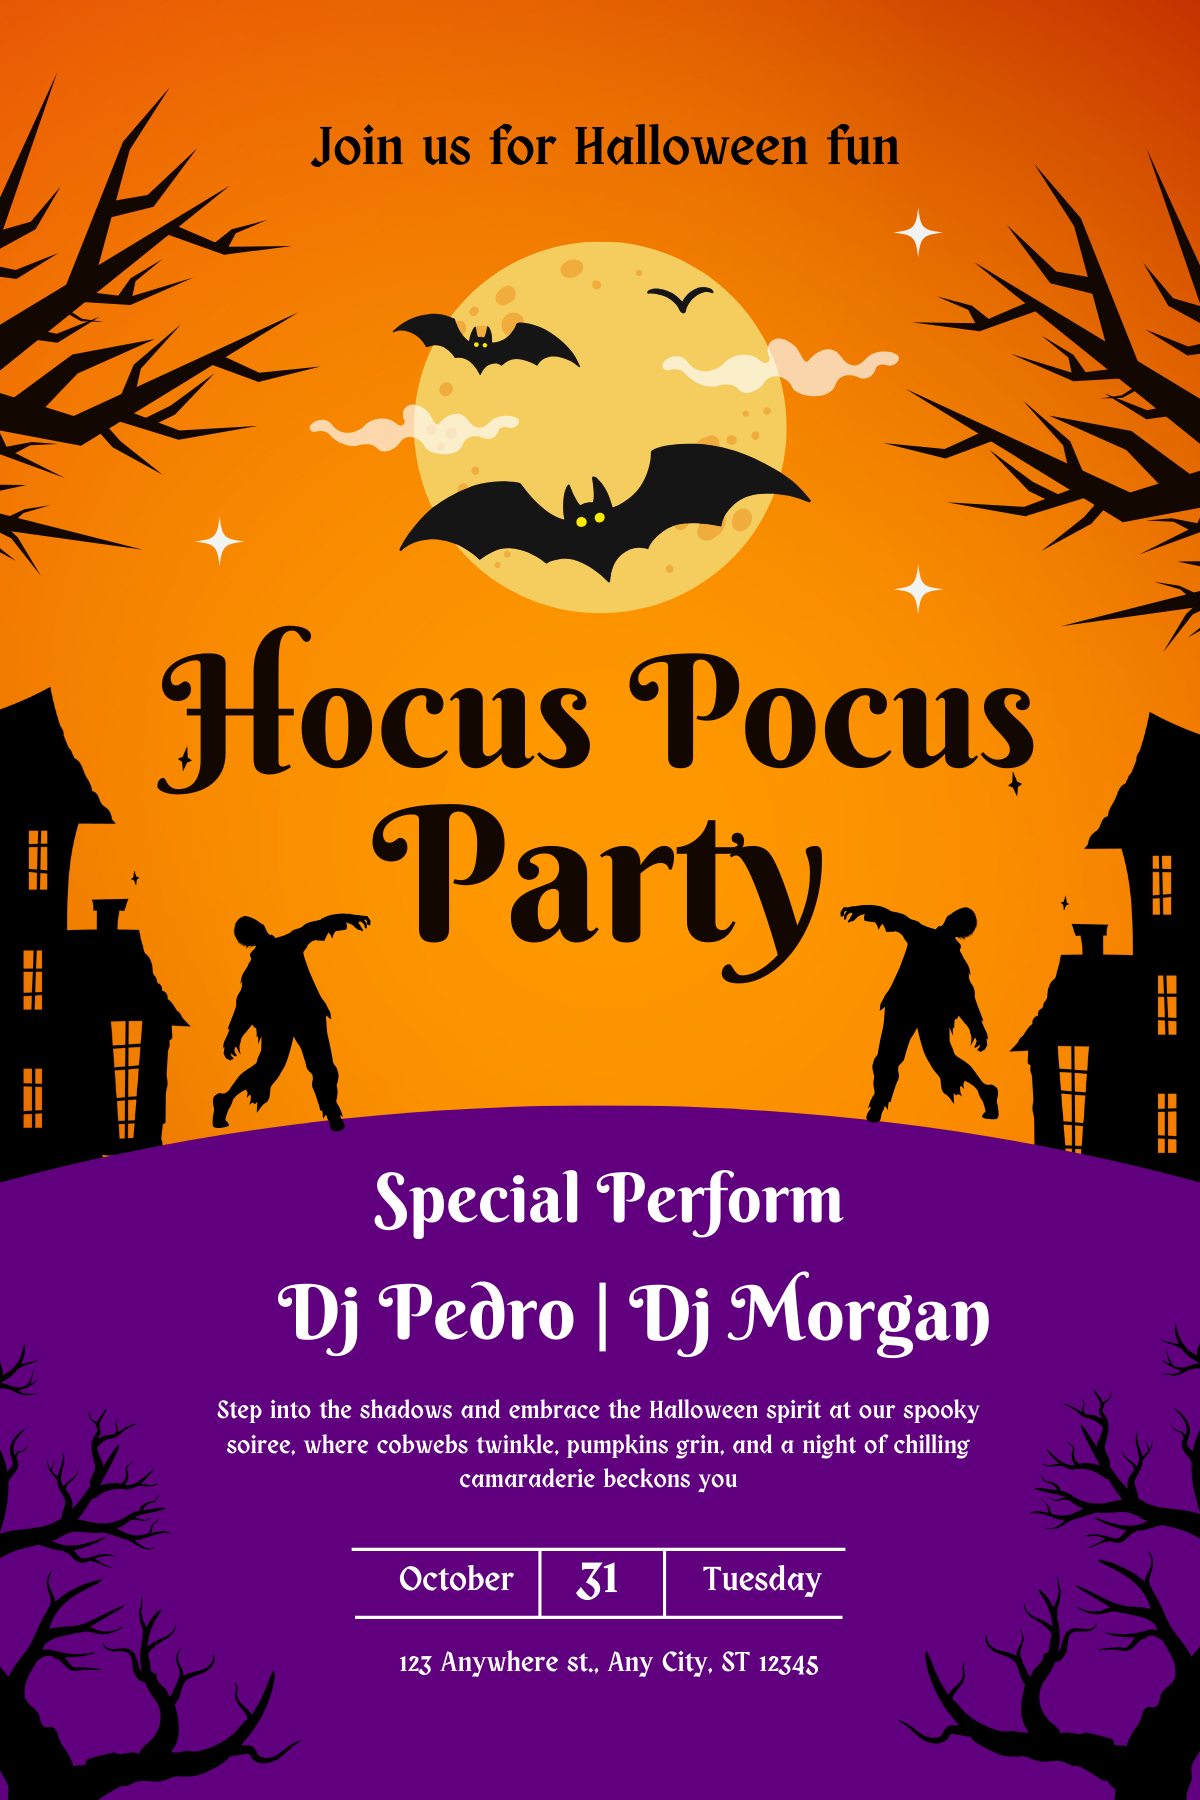 Personalized Hocus Pocus Digital Birthday Card Invitation |Horror and Magical Celebration